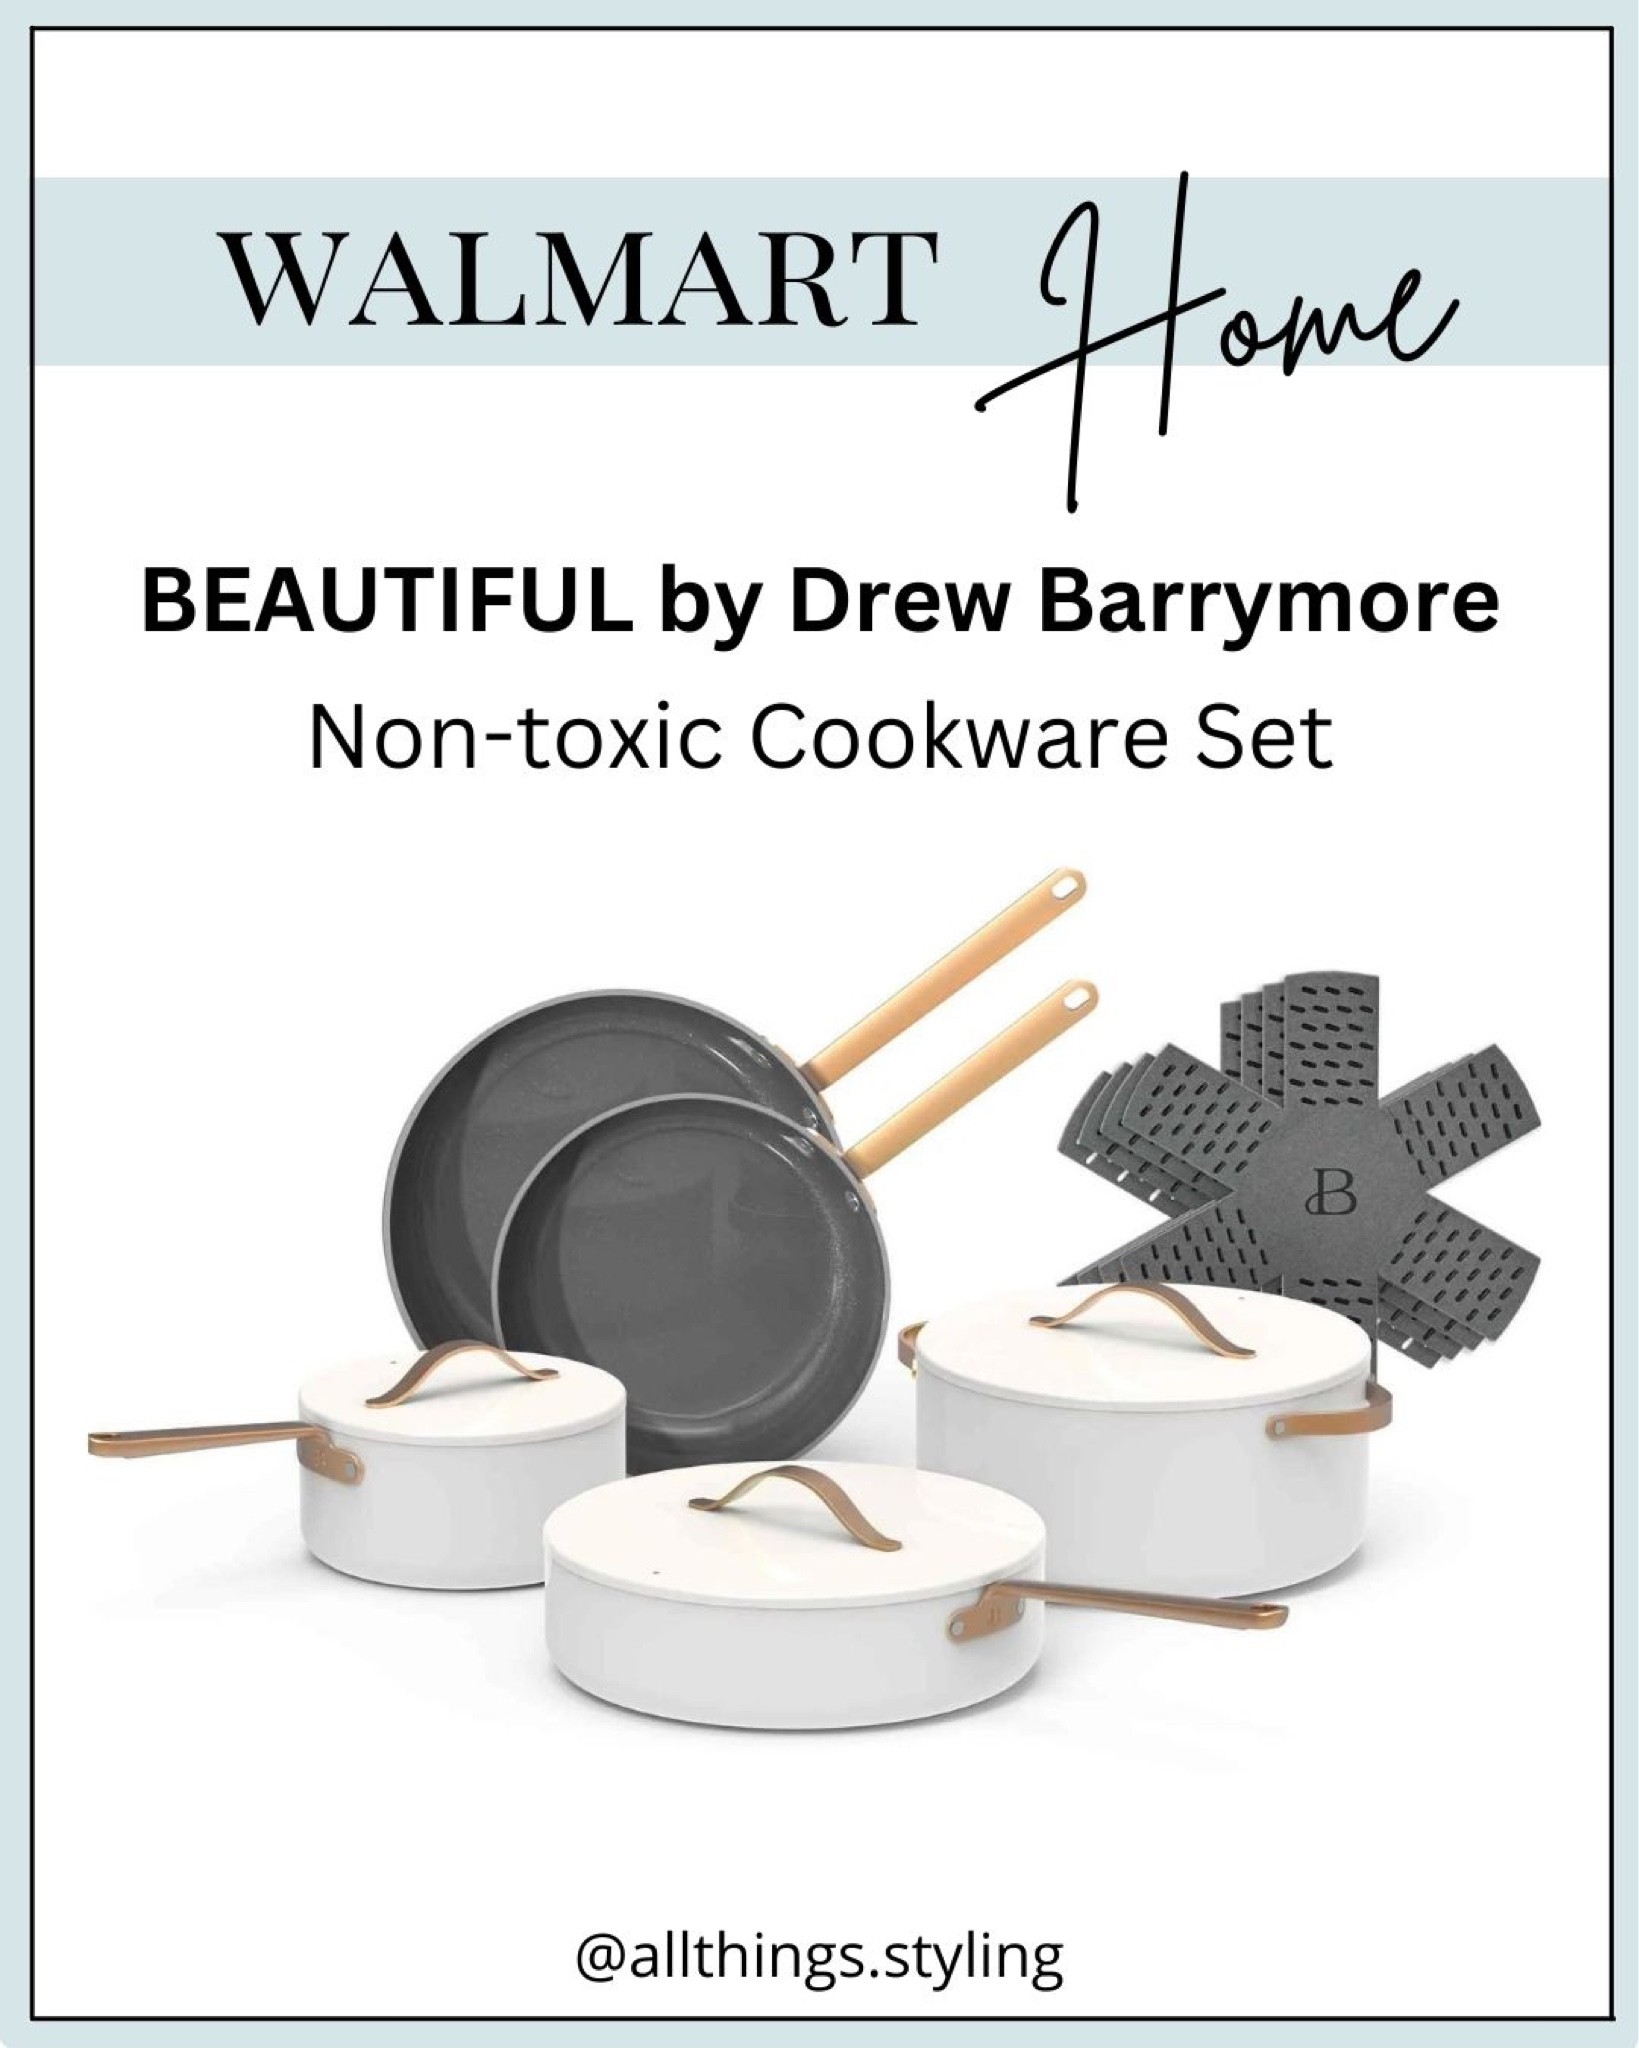 12pc Ceramic Non-Stick Cookware Set, Cornflower Blue, by Drew Barrymore